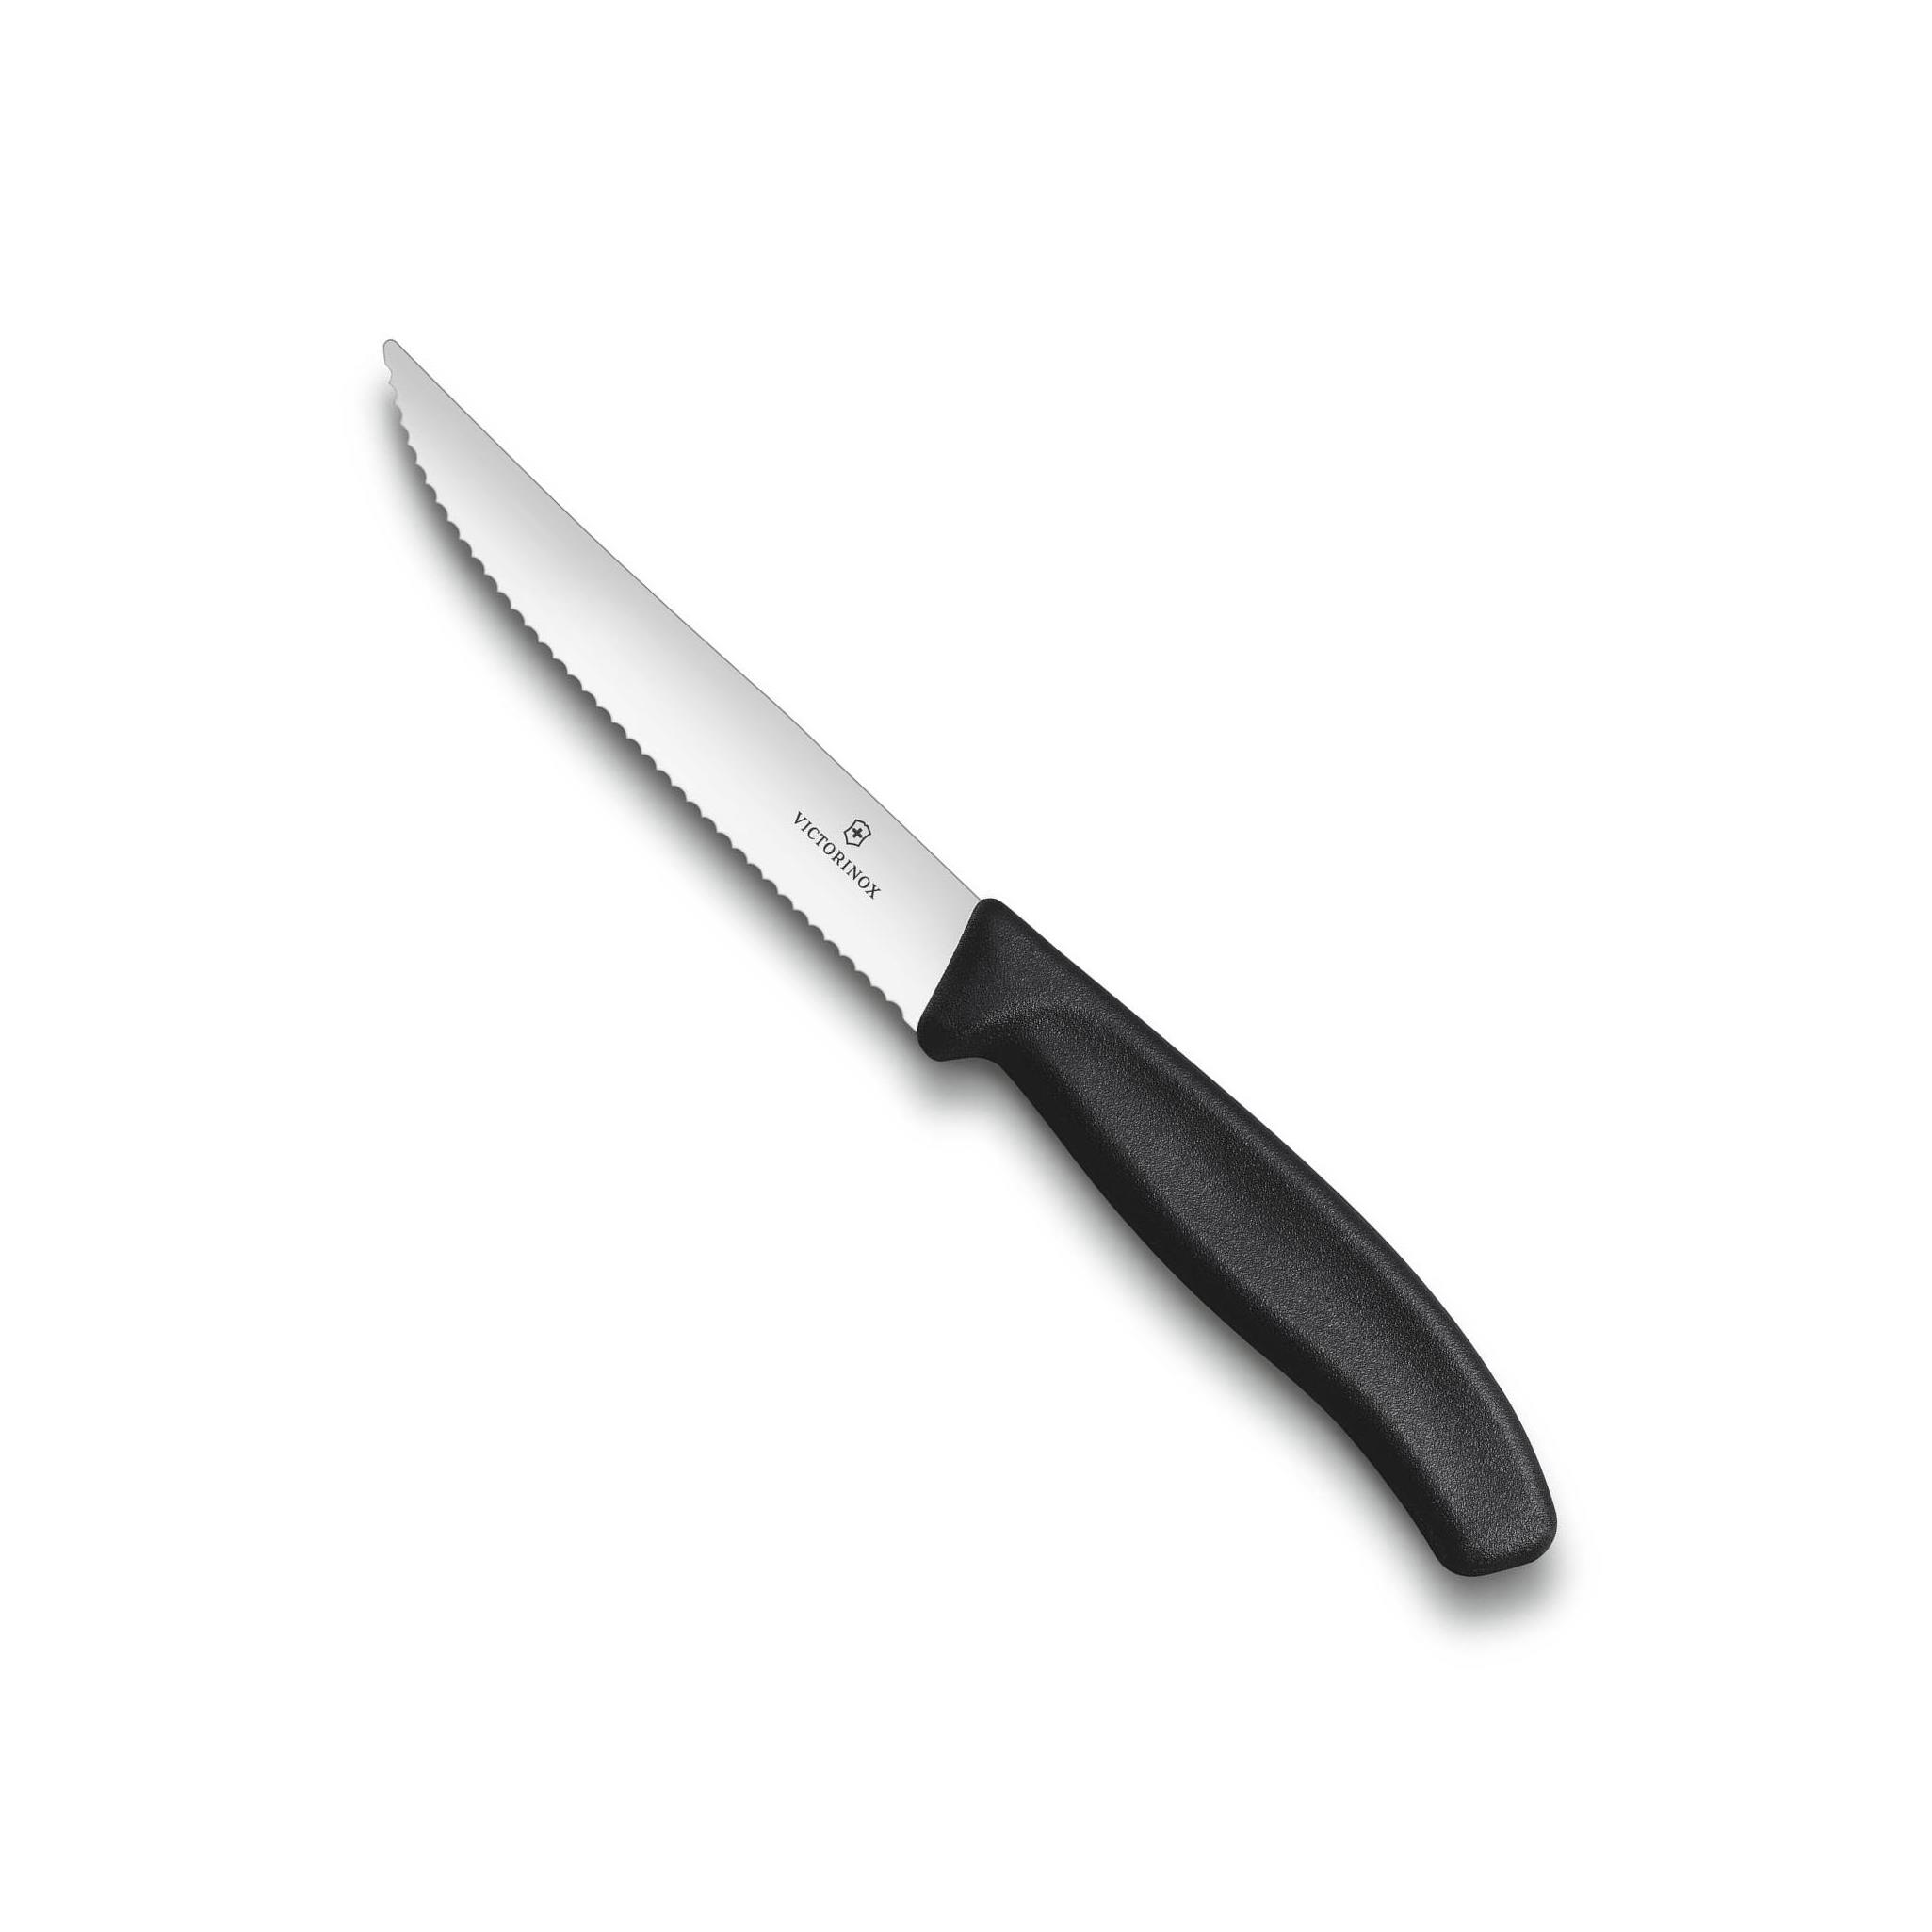 Nůž na steak zoubkovaný SWISS CLASSIC 12 cm černý - Victorinox